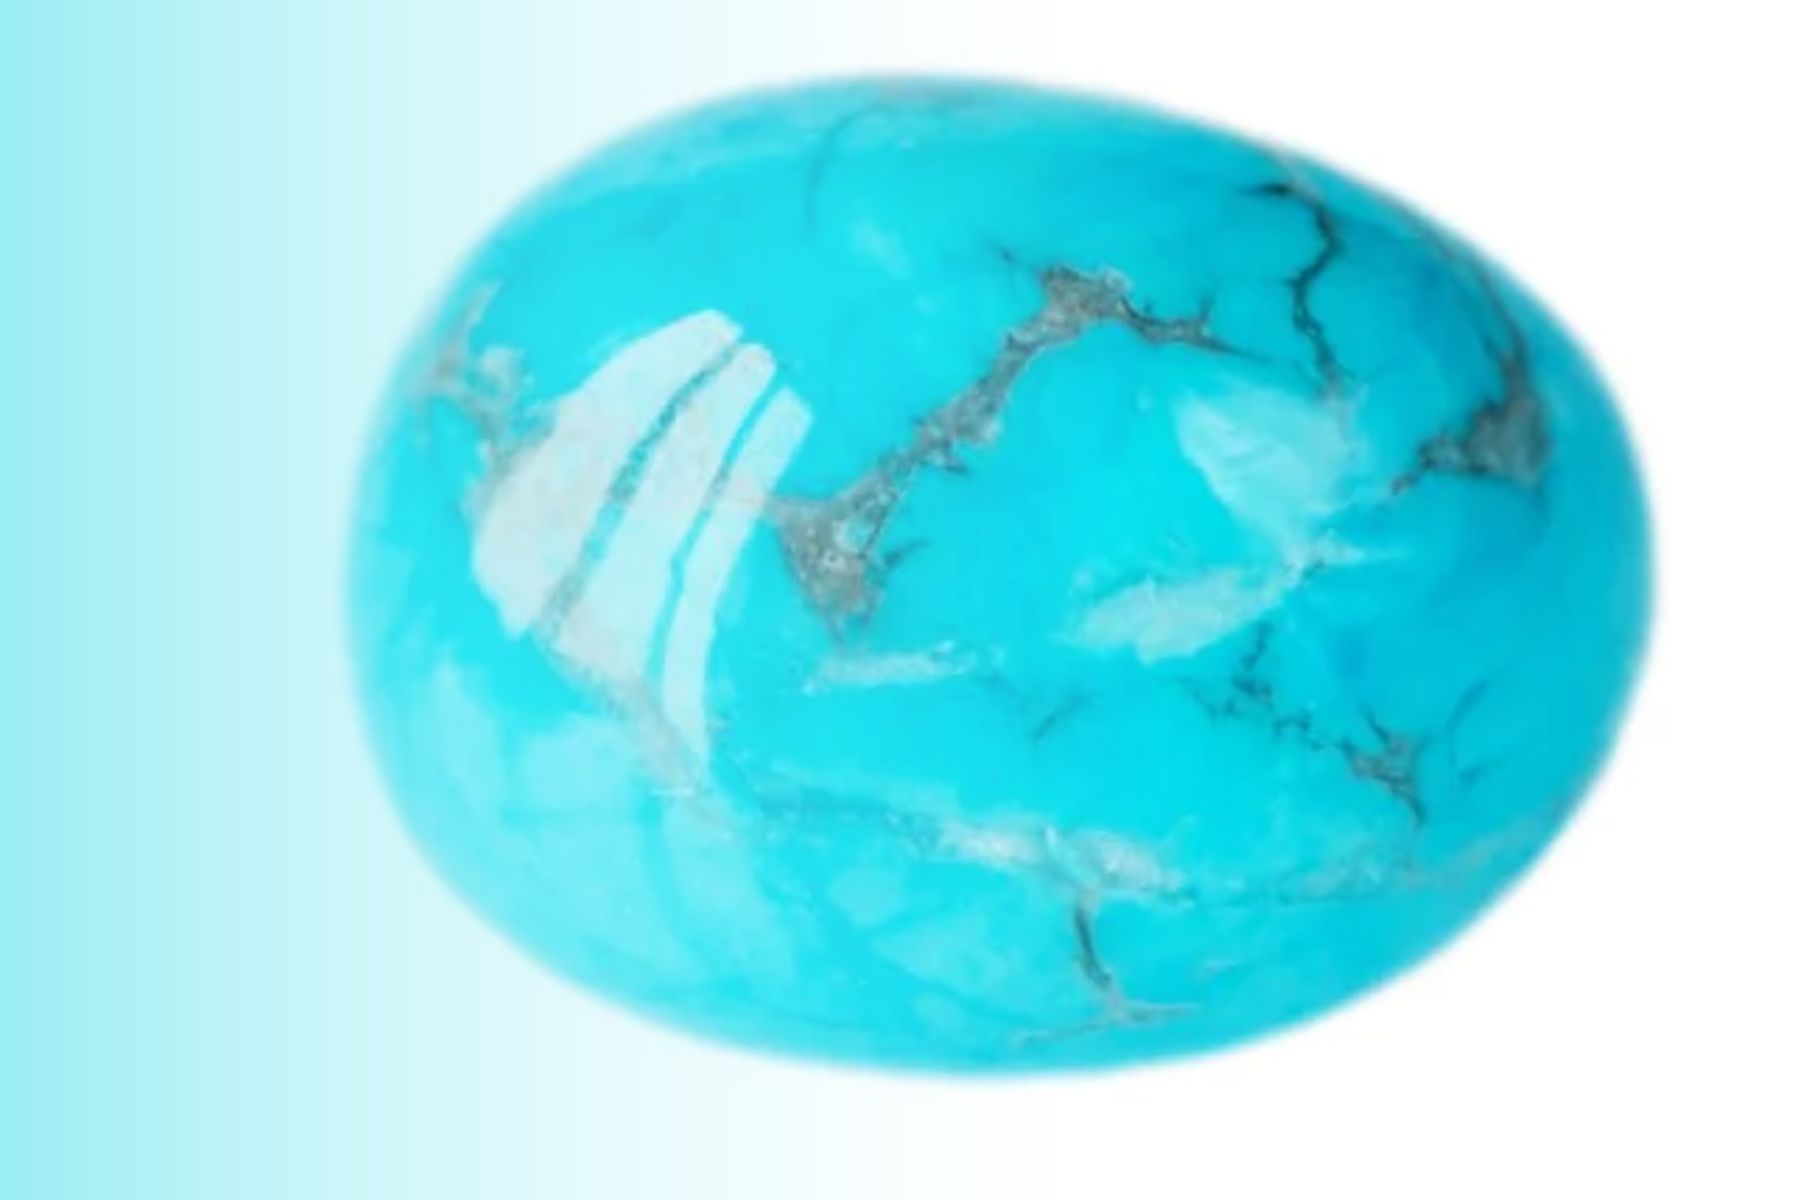 Shiny rock-formed turquoise stone